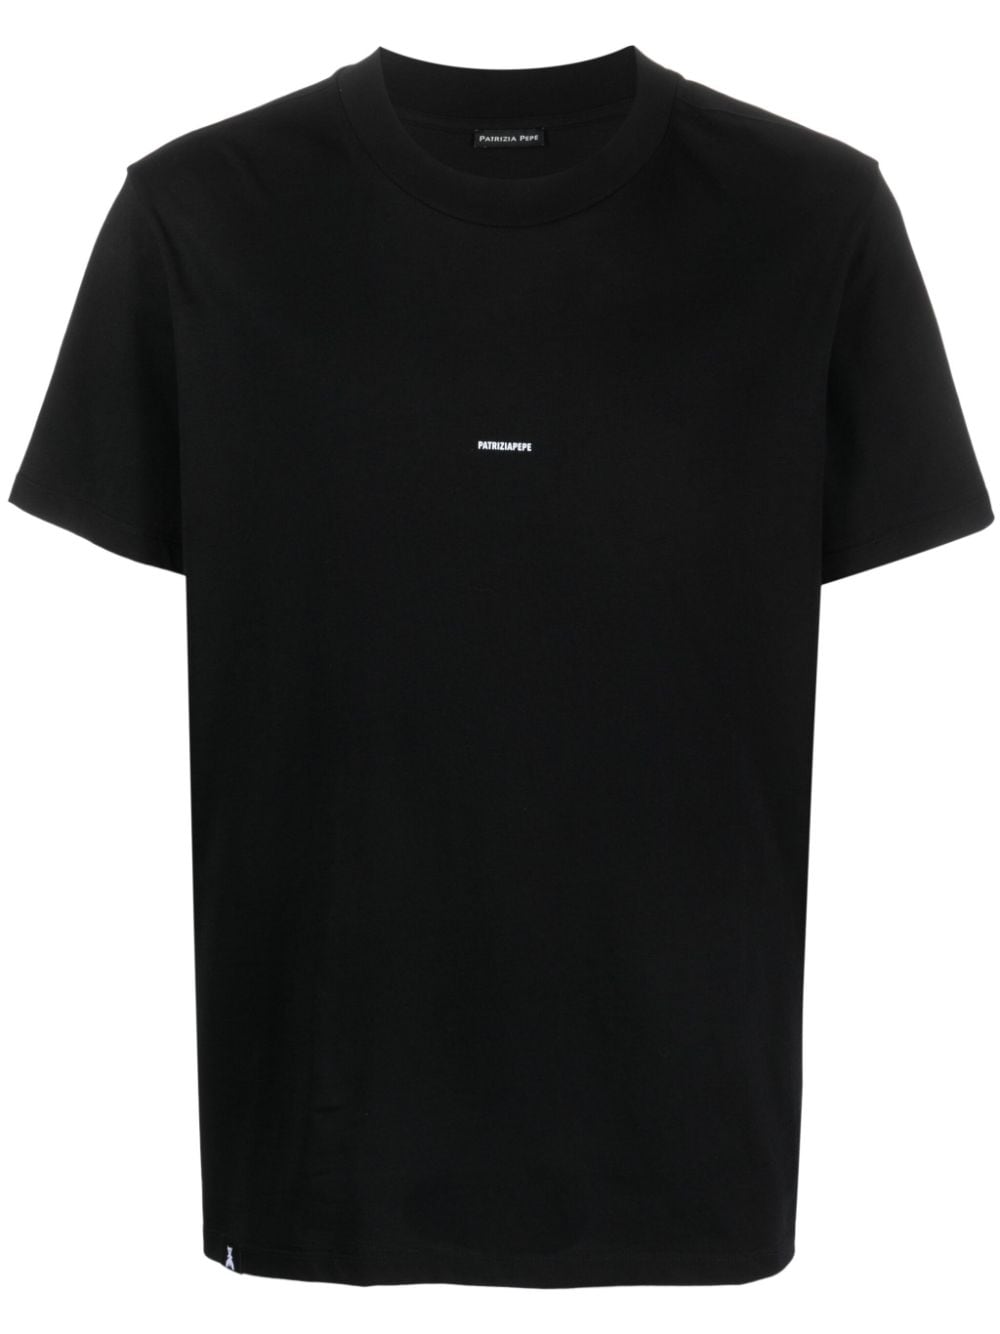 T-shirt nera mini logo petto